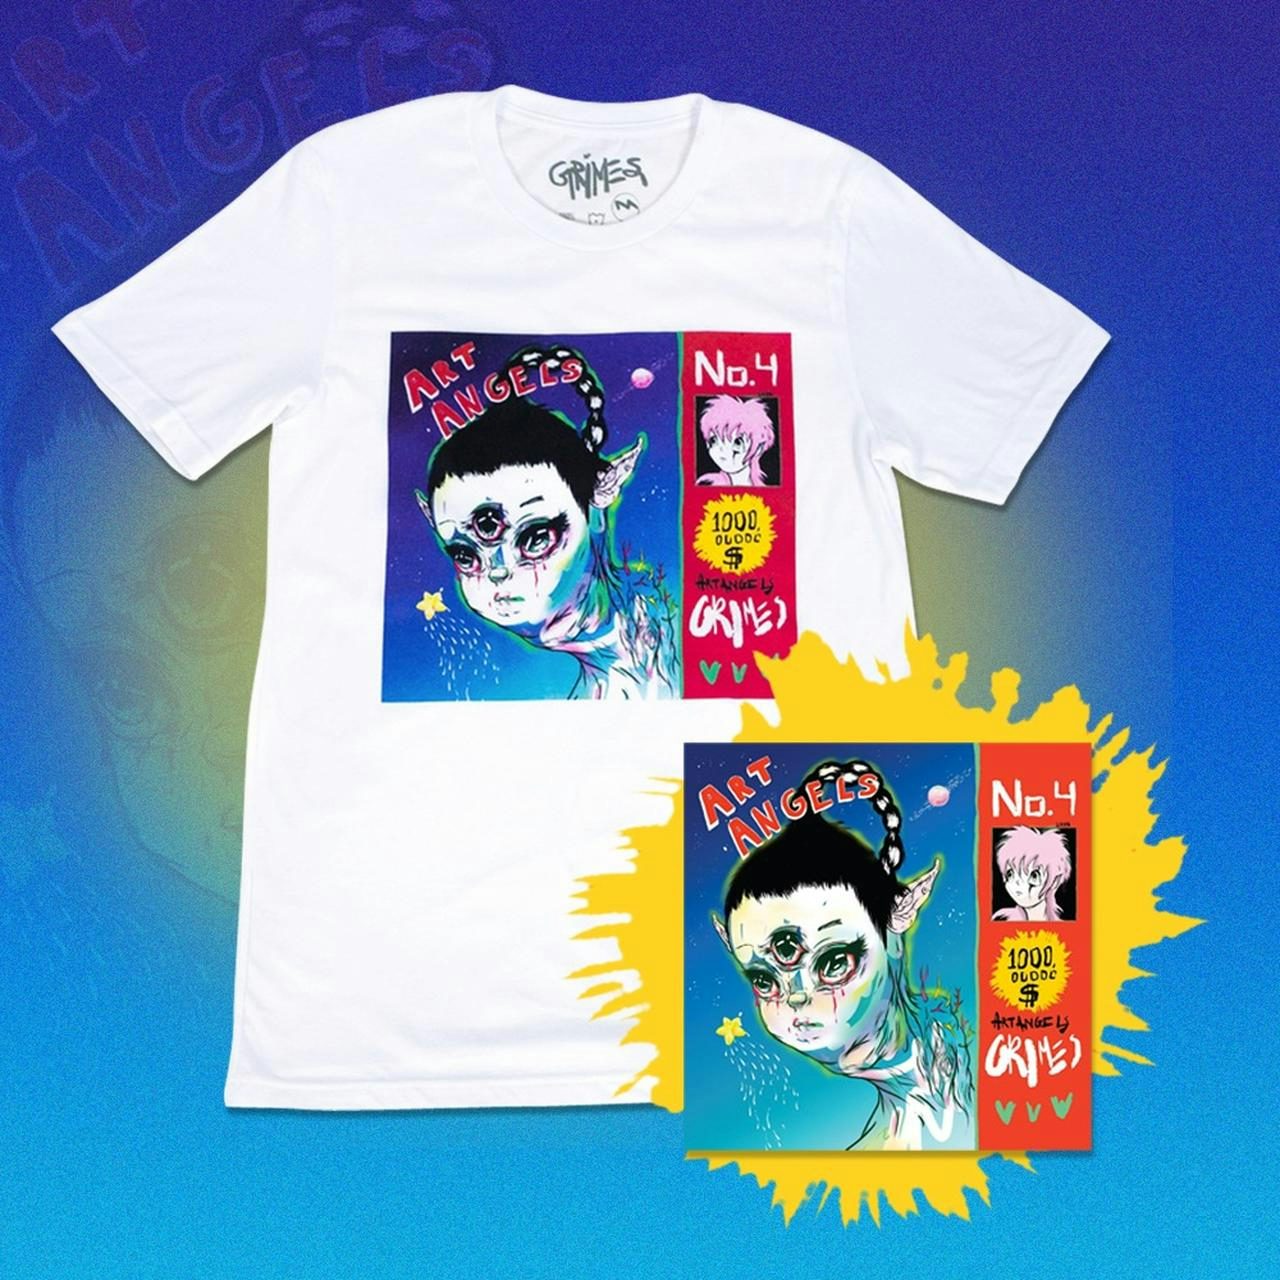 Grimes Art Angels CD and Shirt Bundle